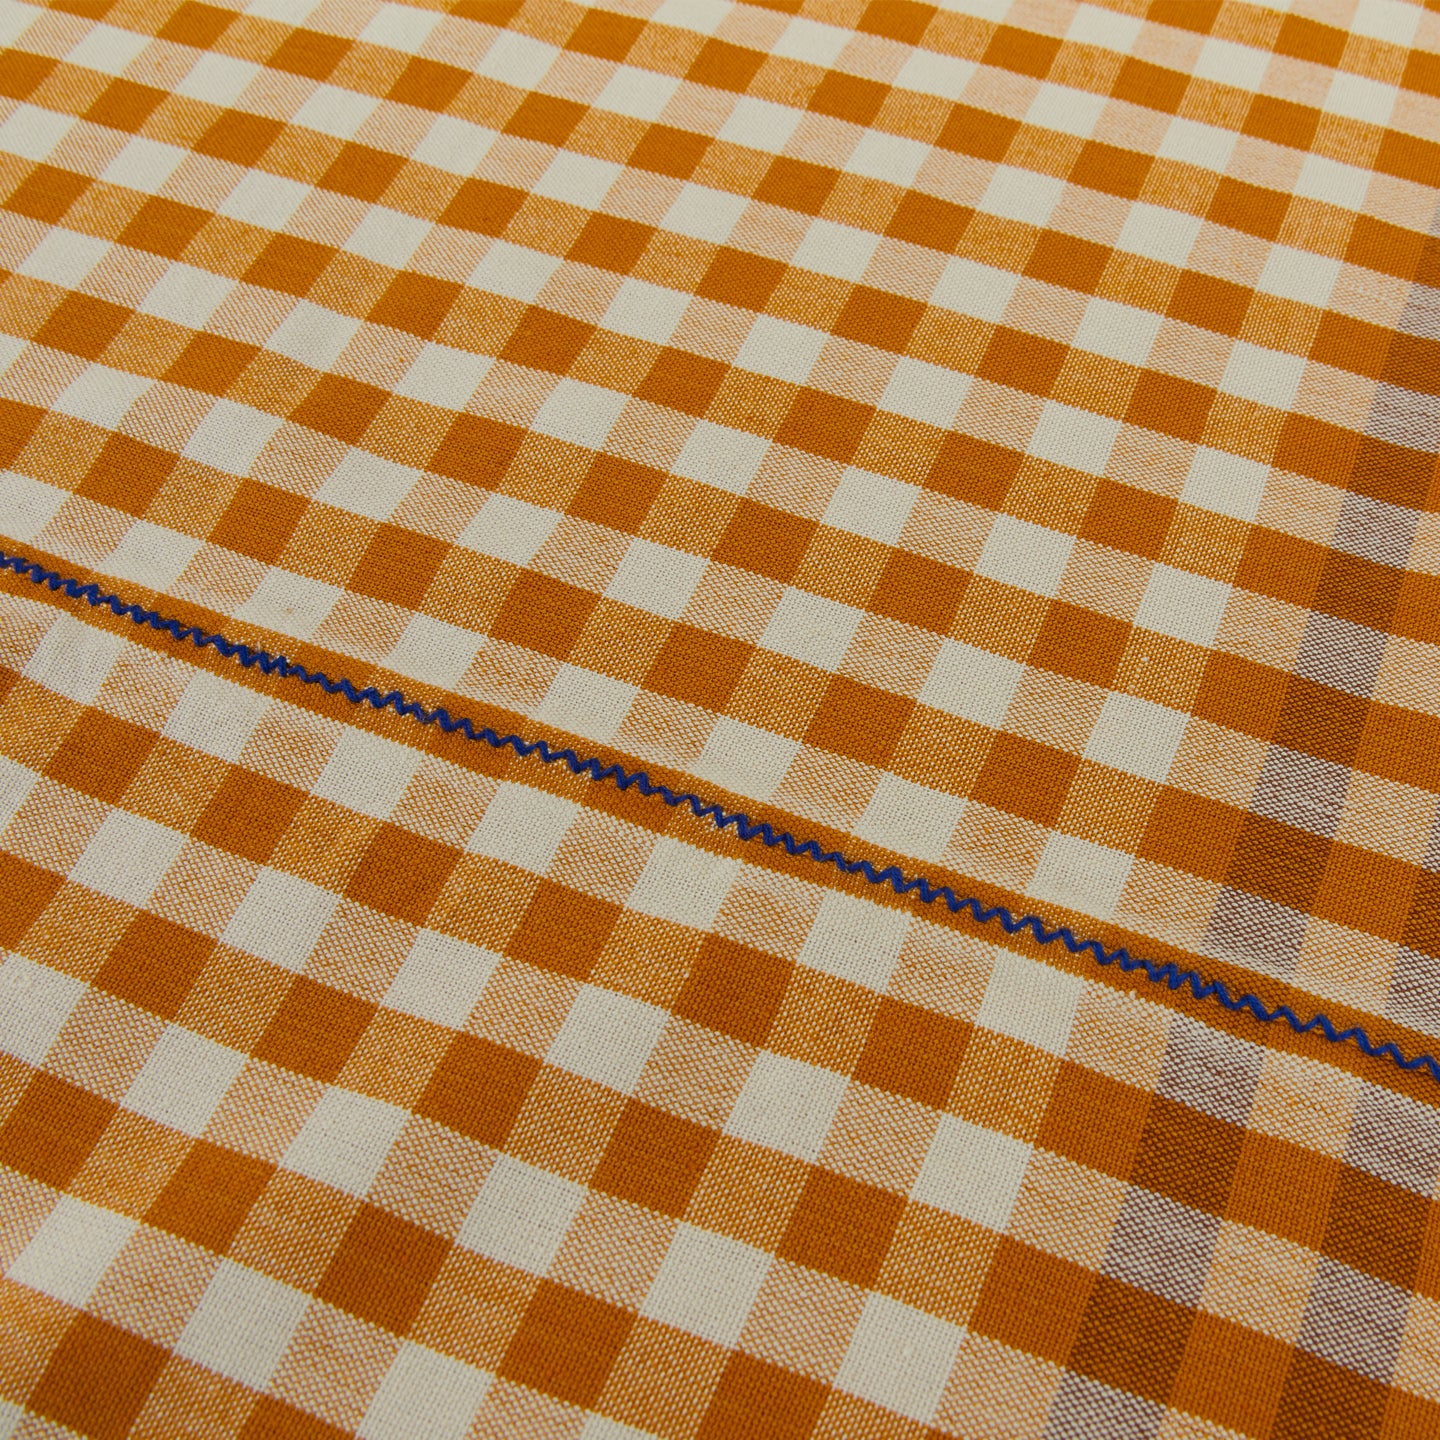 Grid Tablecloth